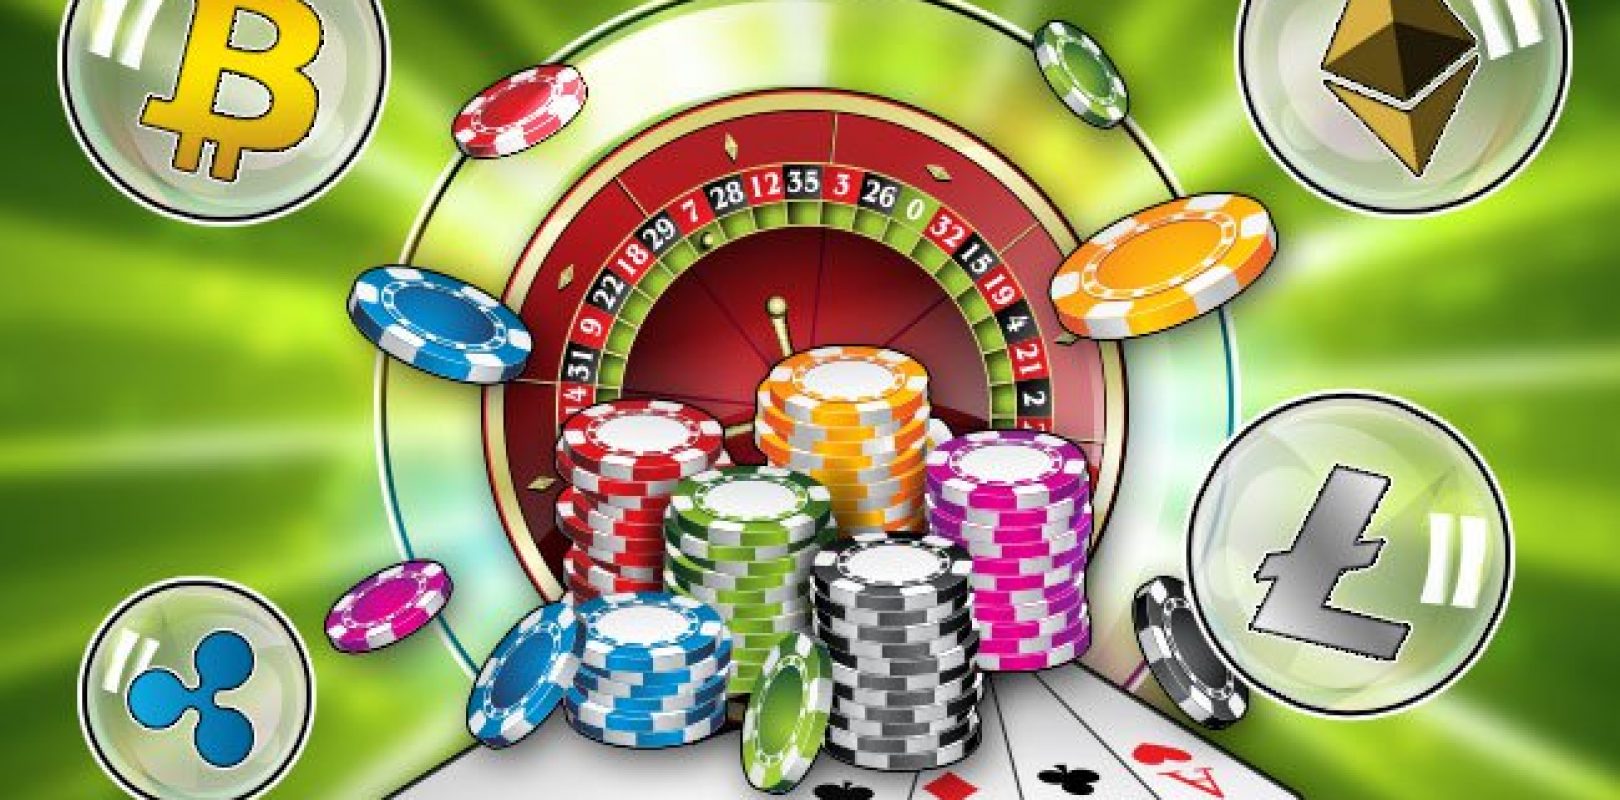 Free slots casino games for fun